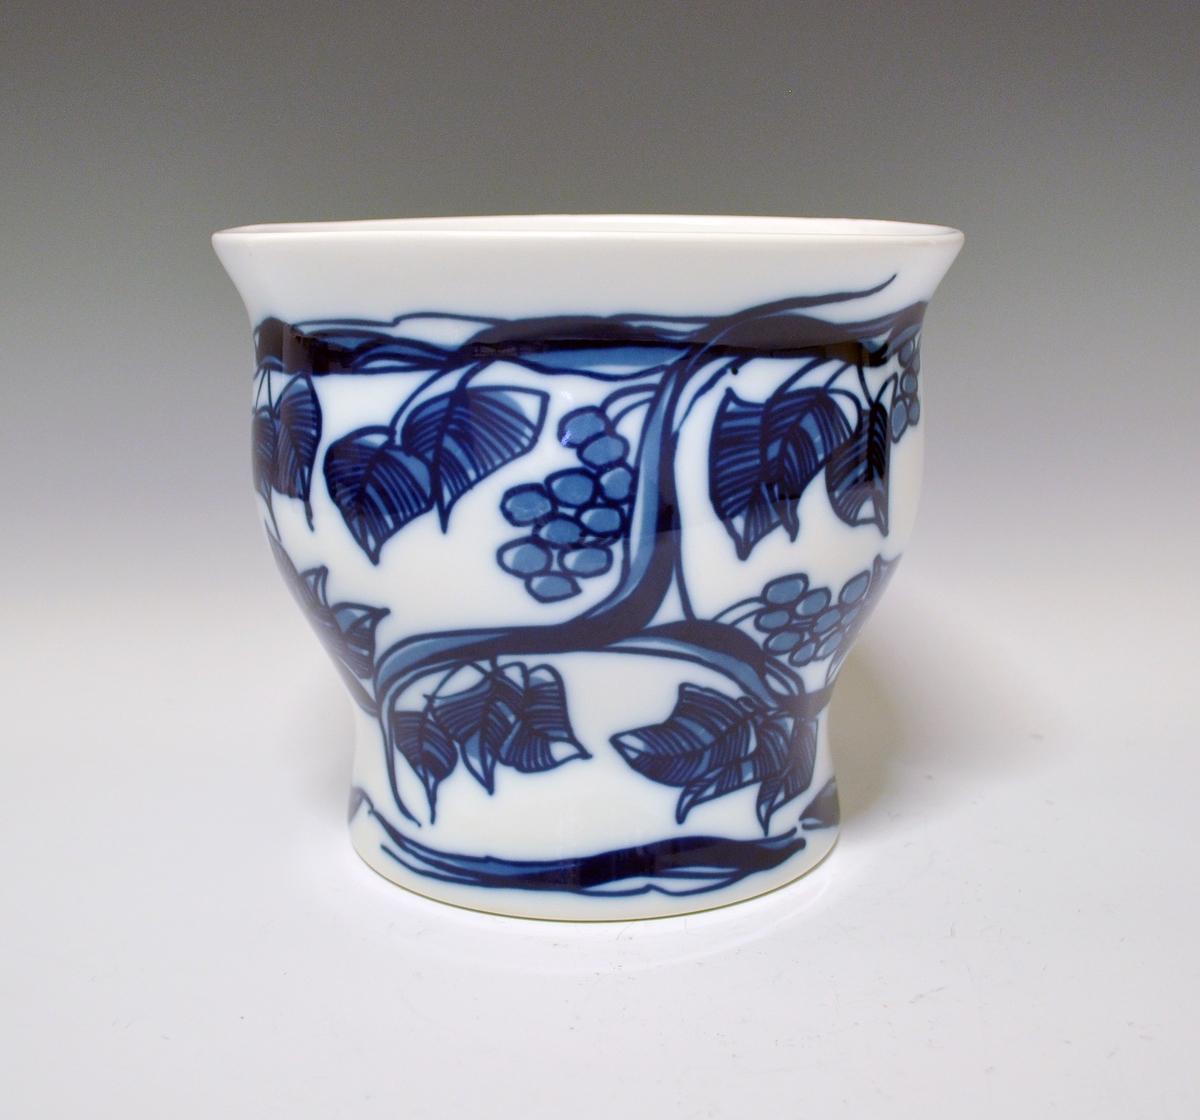 Vase i porselen. Bølget form, sirkelformet fot og oval åpning på toppen. Hvit glasur. Blå underglasurdekor: Grener med blader og drueklaser.
Kunstner: Unni M. Johnsen.